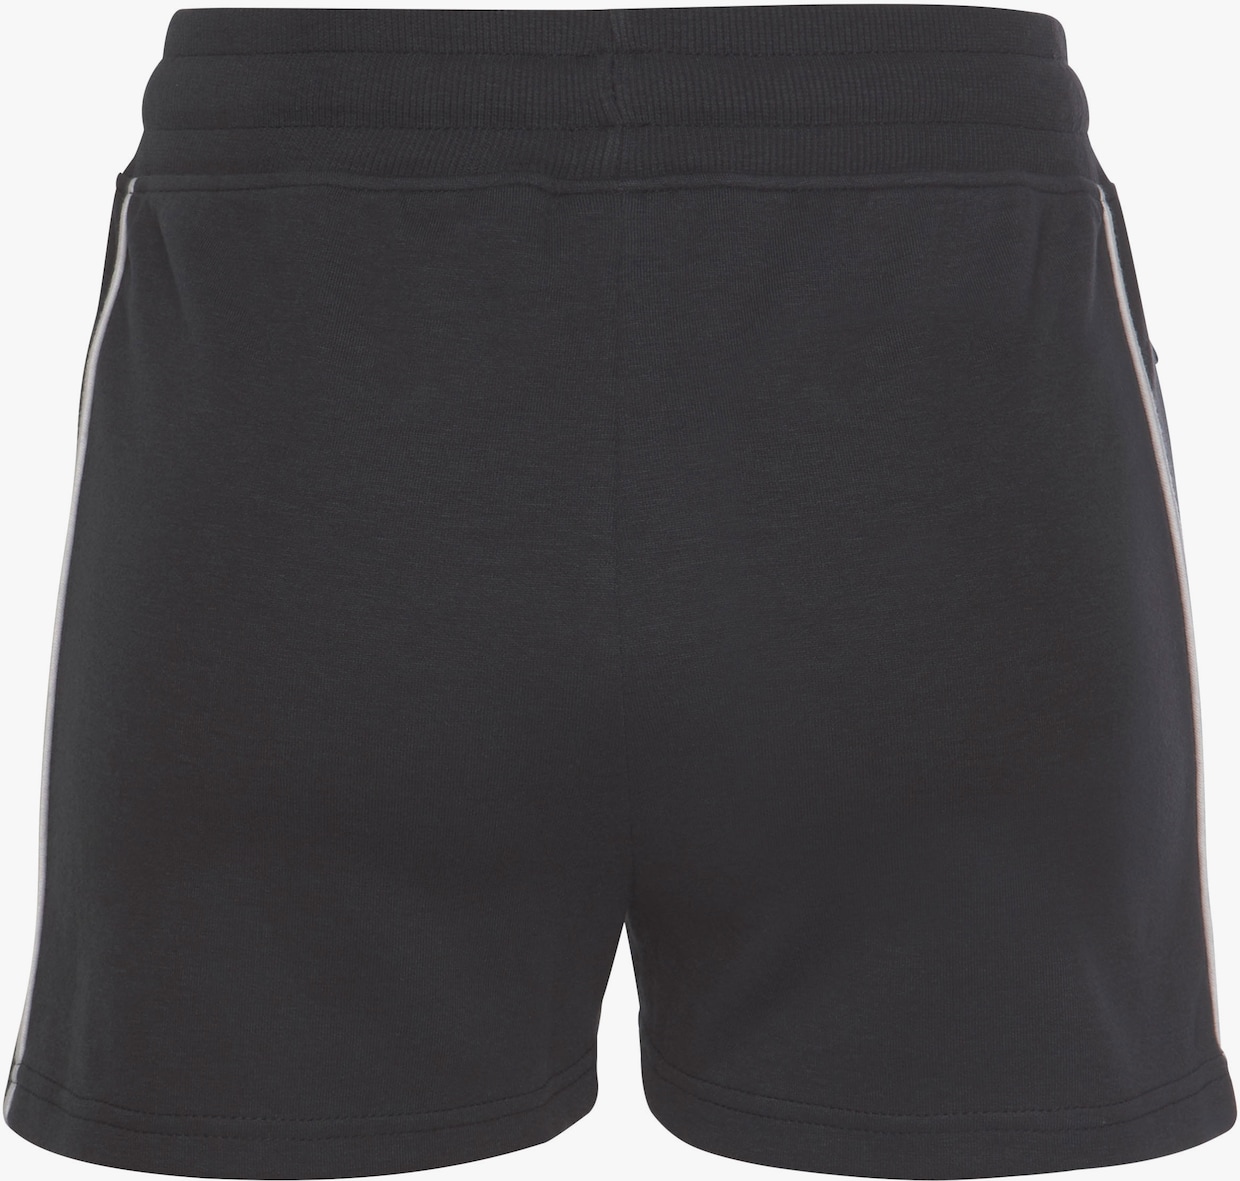 H.I.S Shorts - marine